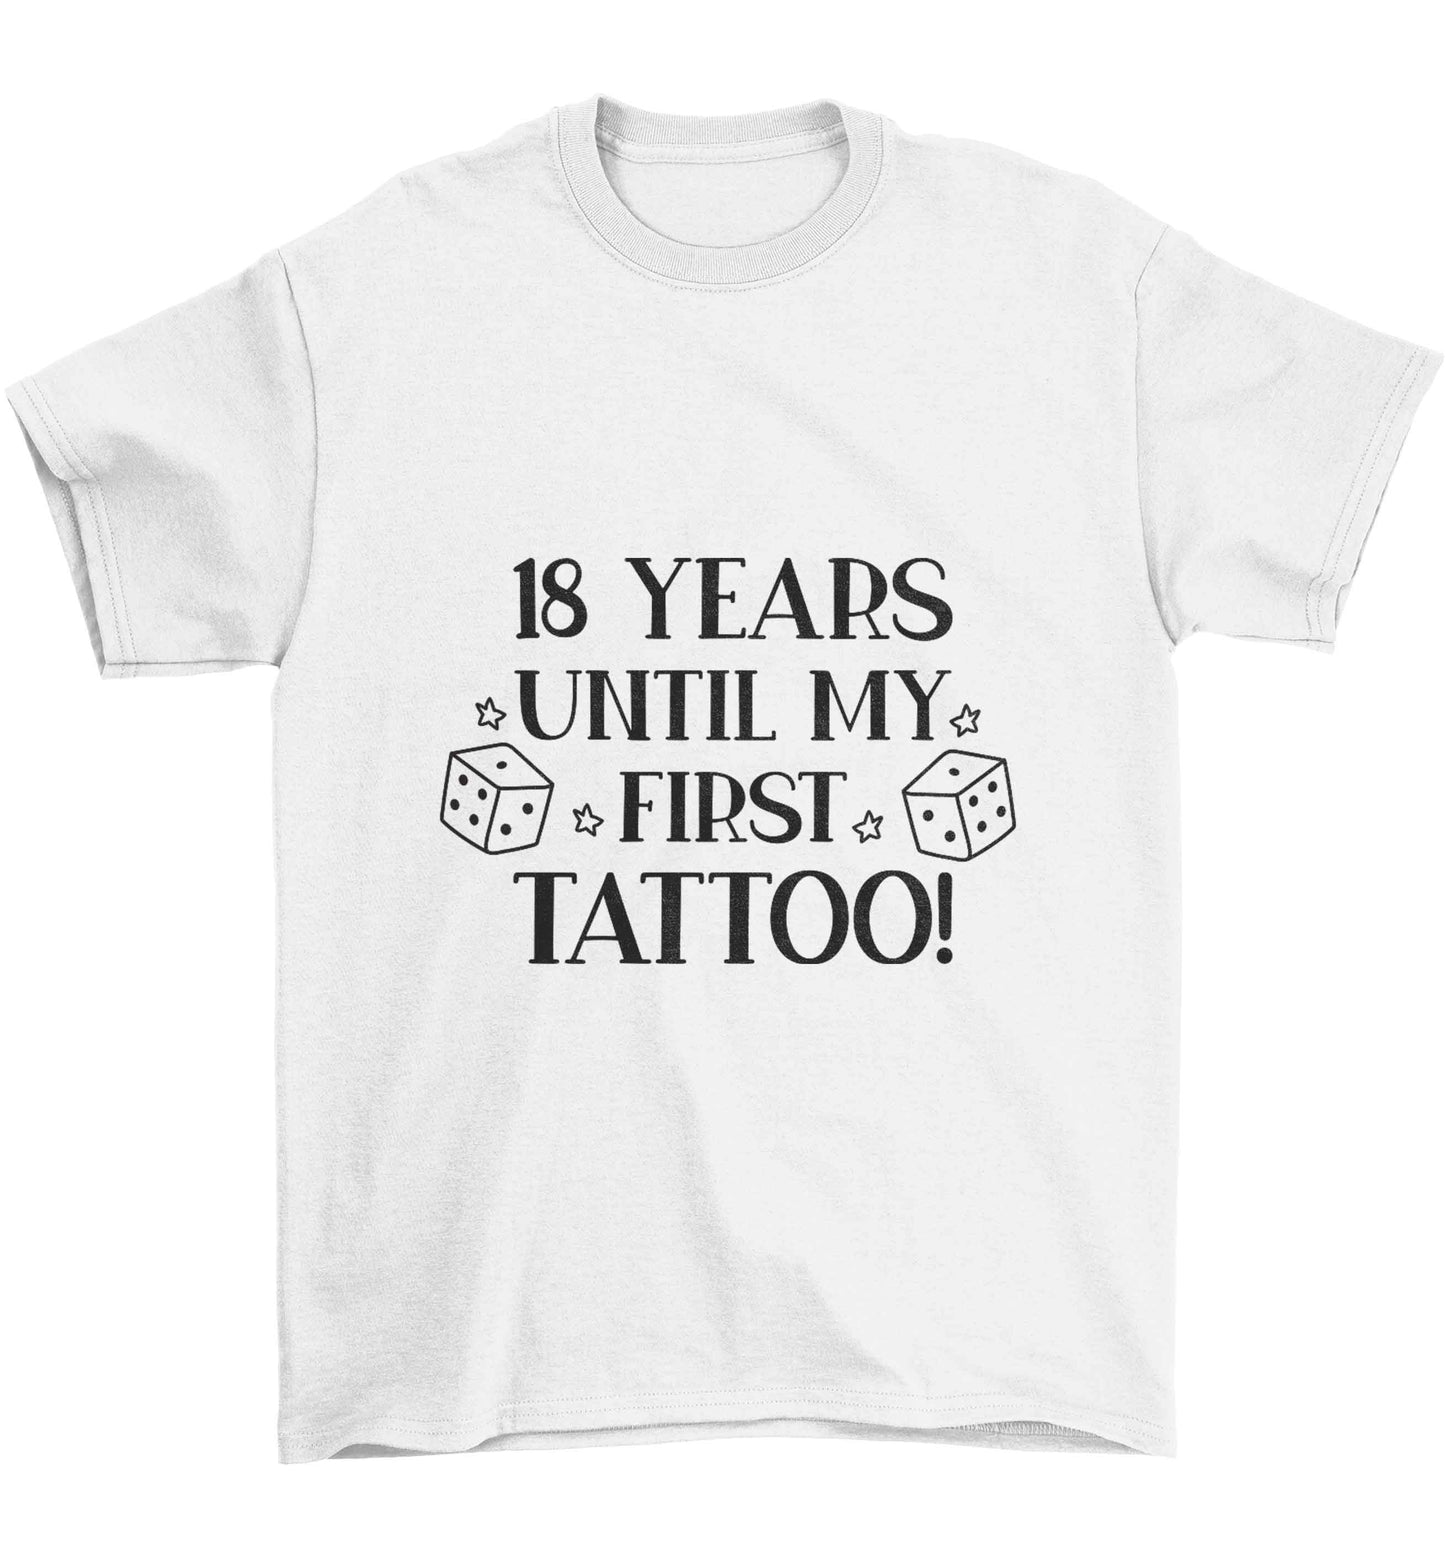 18 Years Until my First Tattoo Children's white Tshirt 12-13 Years